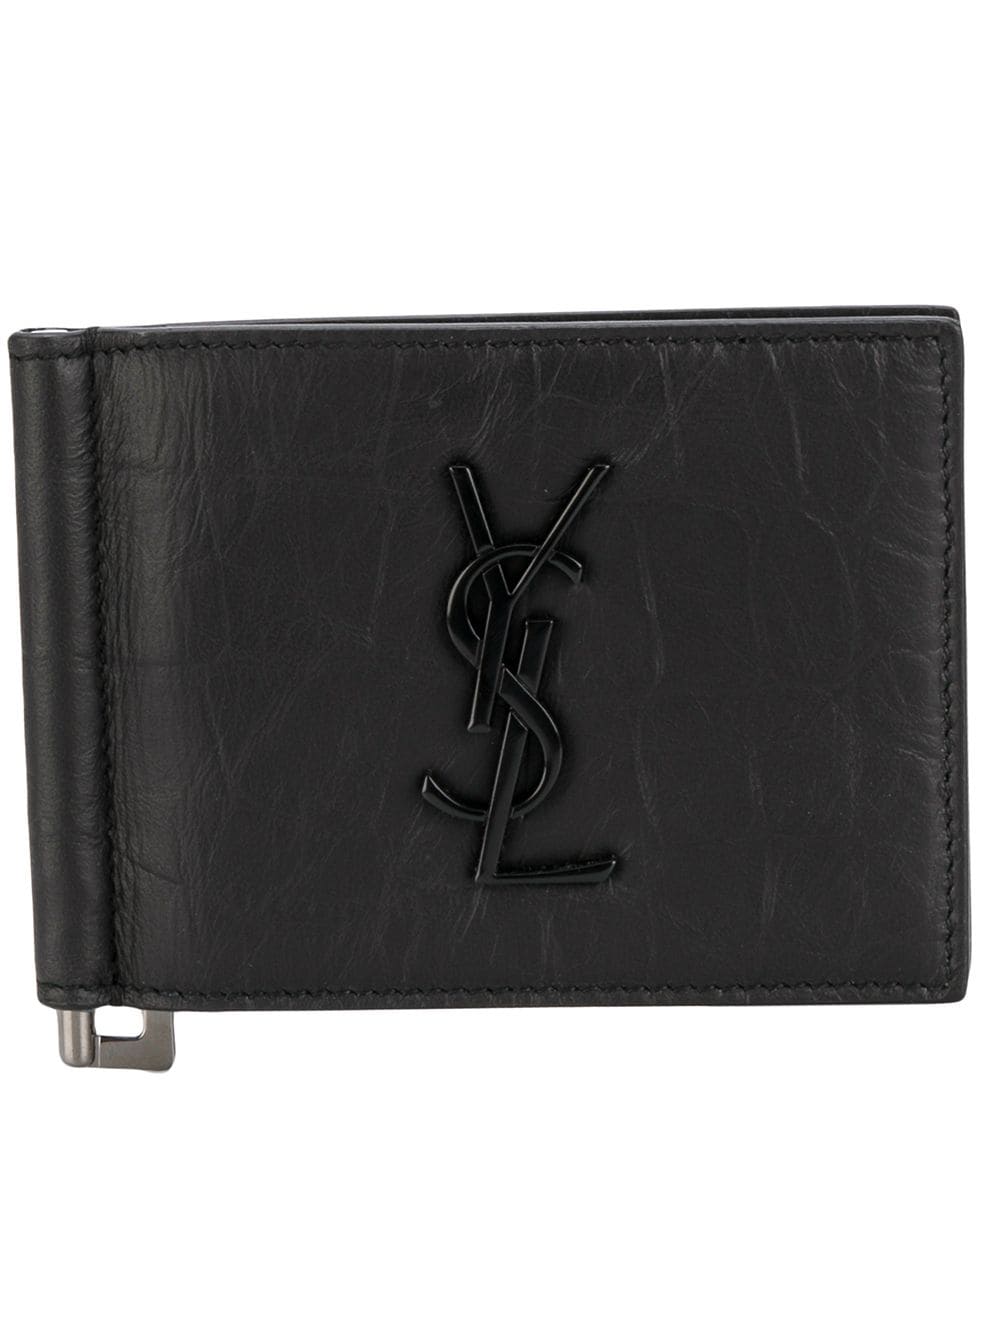 Saint Laurent Men's Embossed Leather Money Clip Wallet